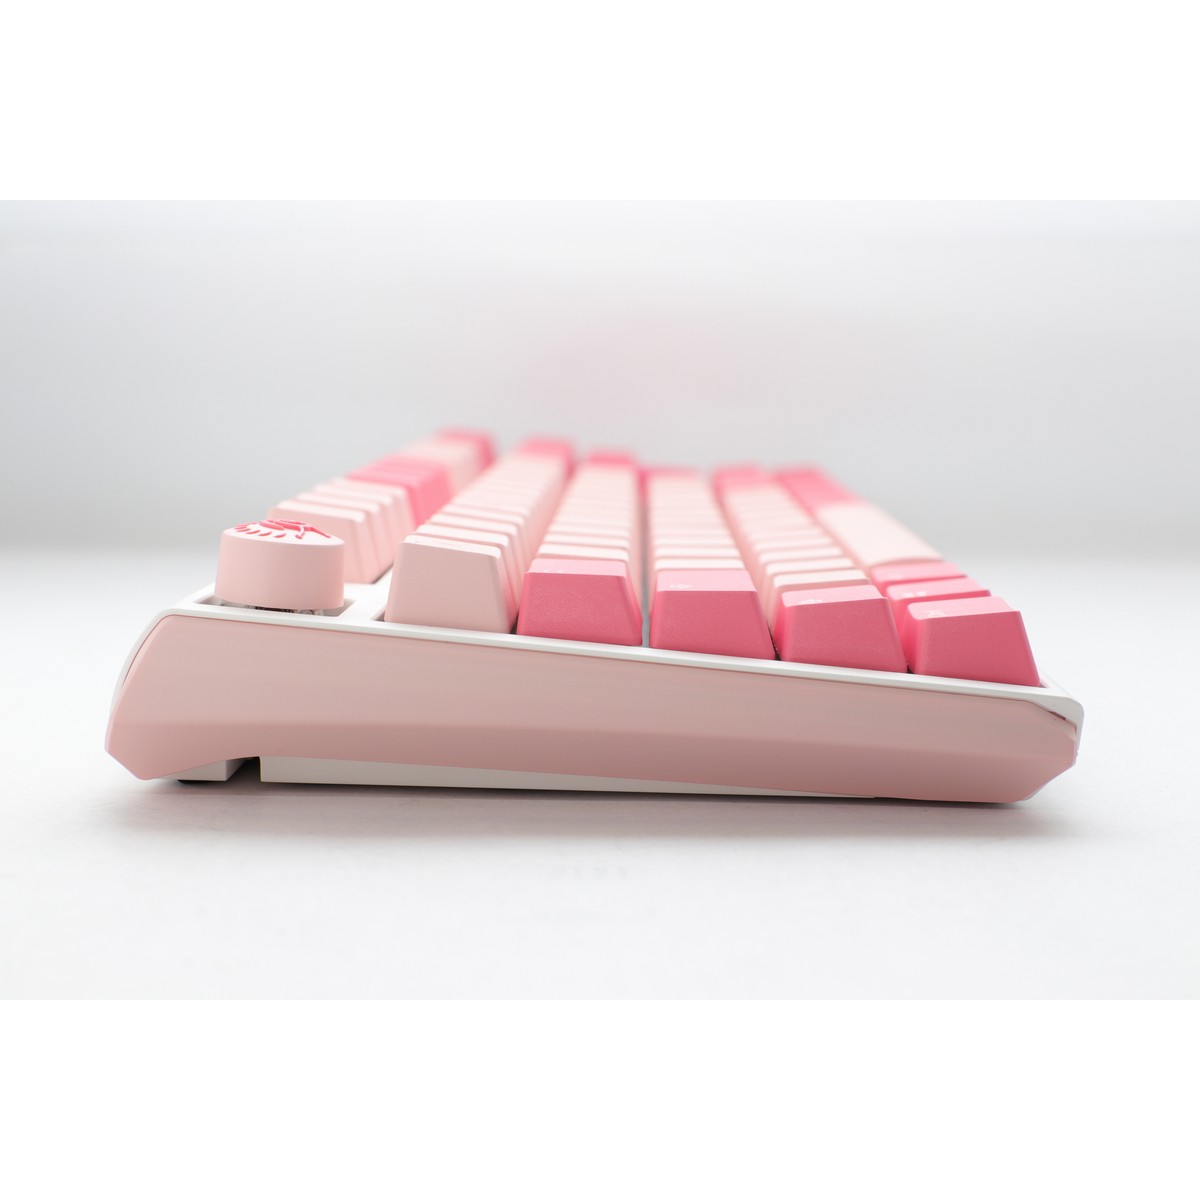 Ducky - Ducky One 3 Gossamer Pink TKL 80% USB Cherry MX Silent Red Mechanical Gaming Key